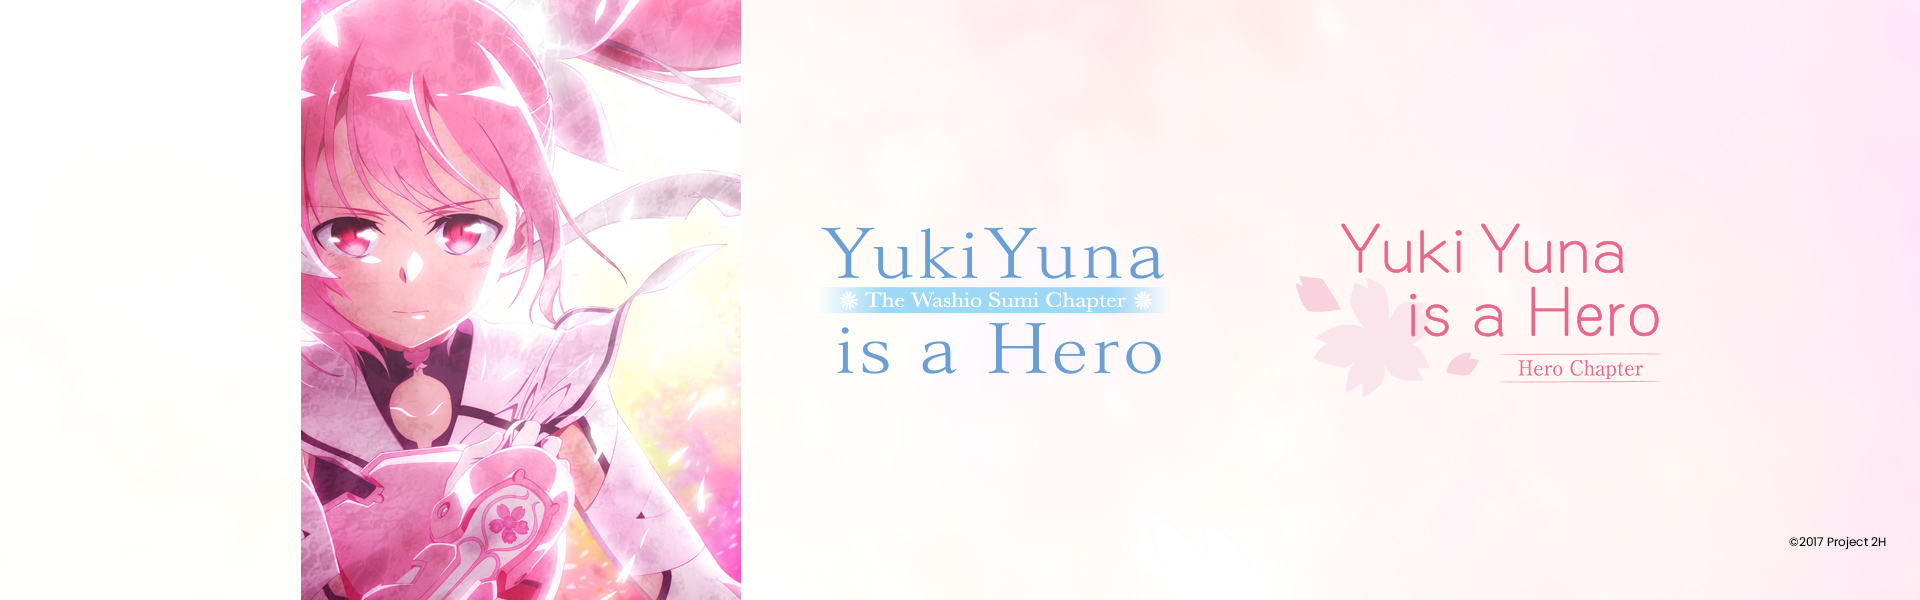 Yuki Yuna is a Hero: Washio Sumi Chapter/ Yuki Yuna is a Hero: Hero Chapter